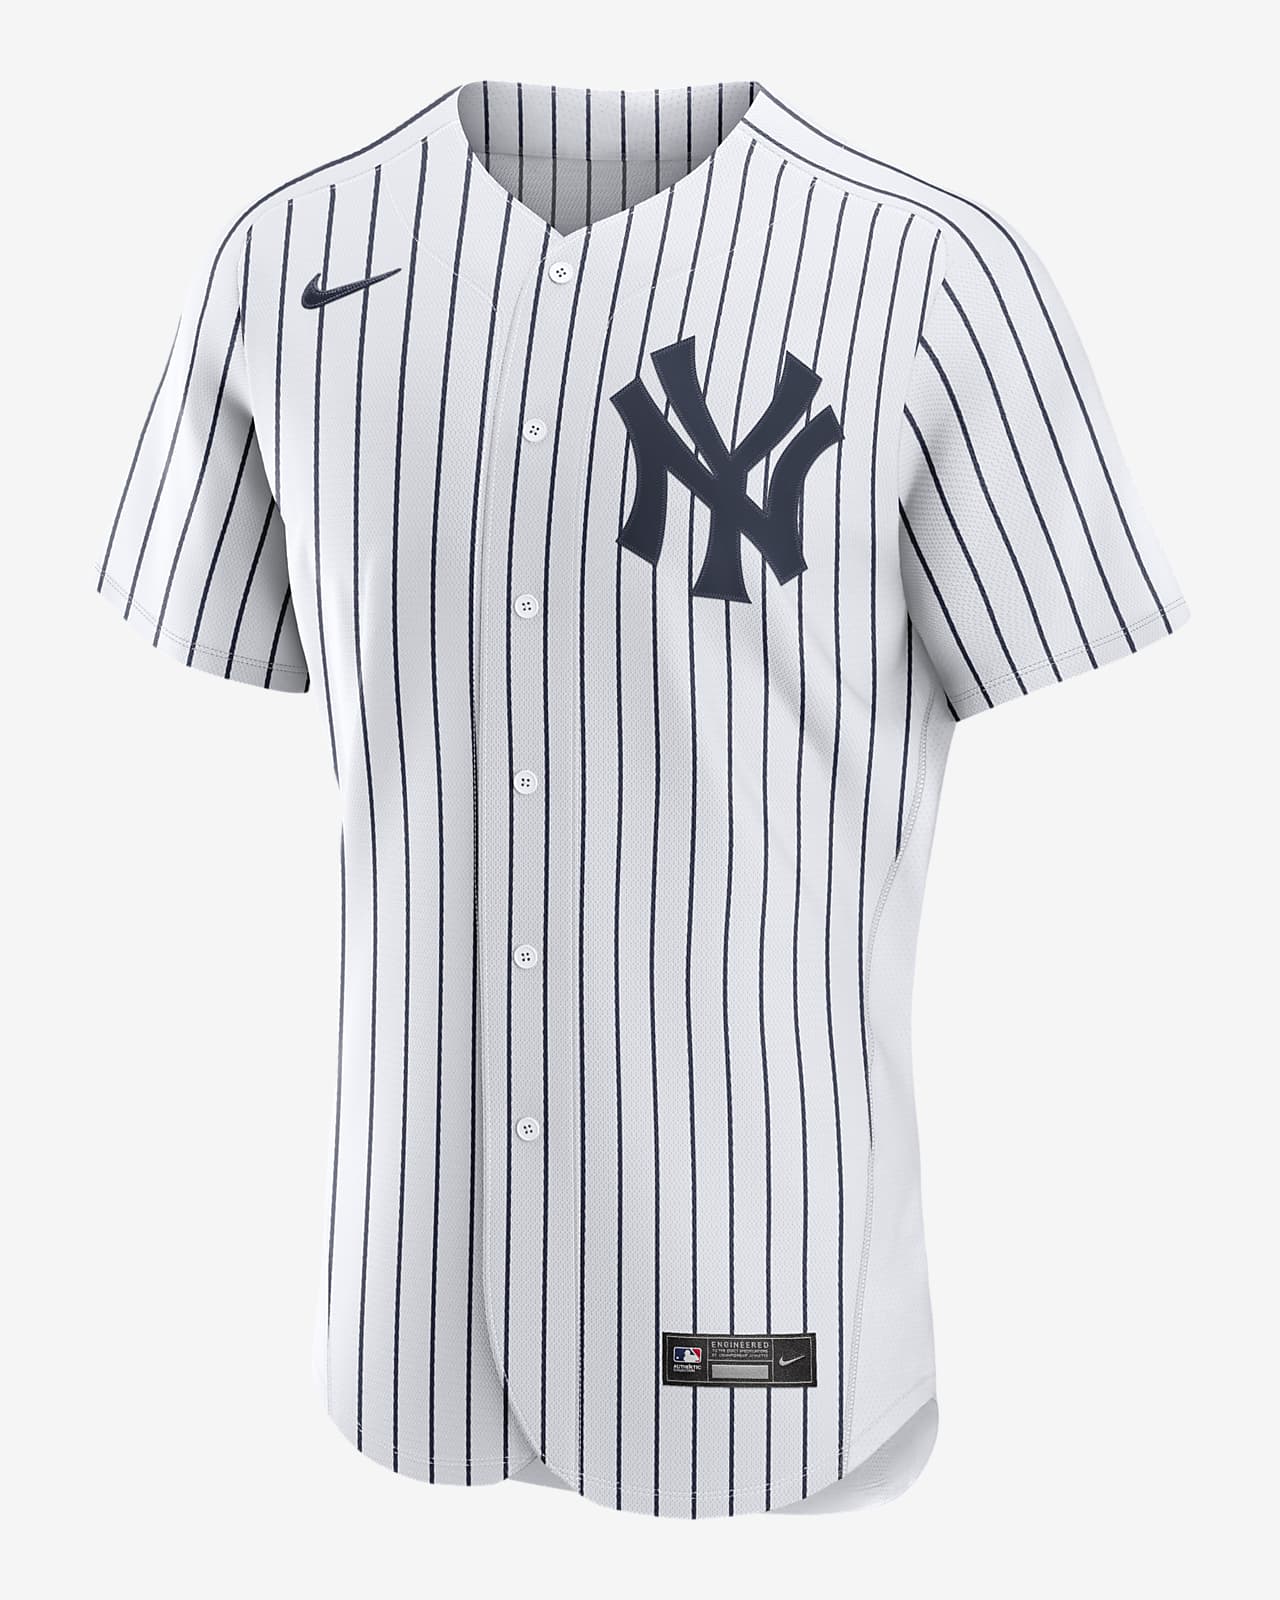 Jersey Nike de la MLB Authentic para hombre Juan Soto New York Yankees